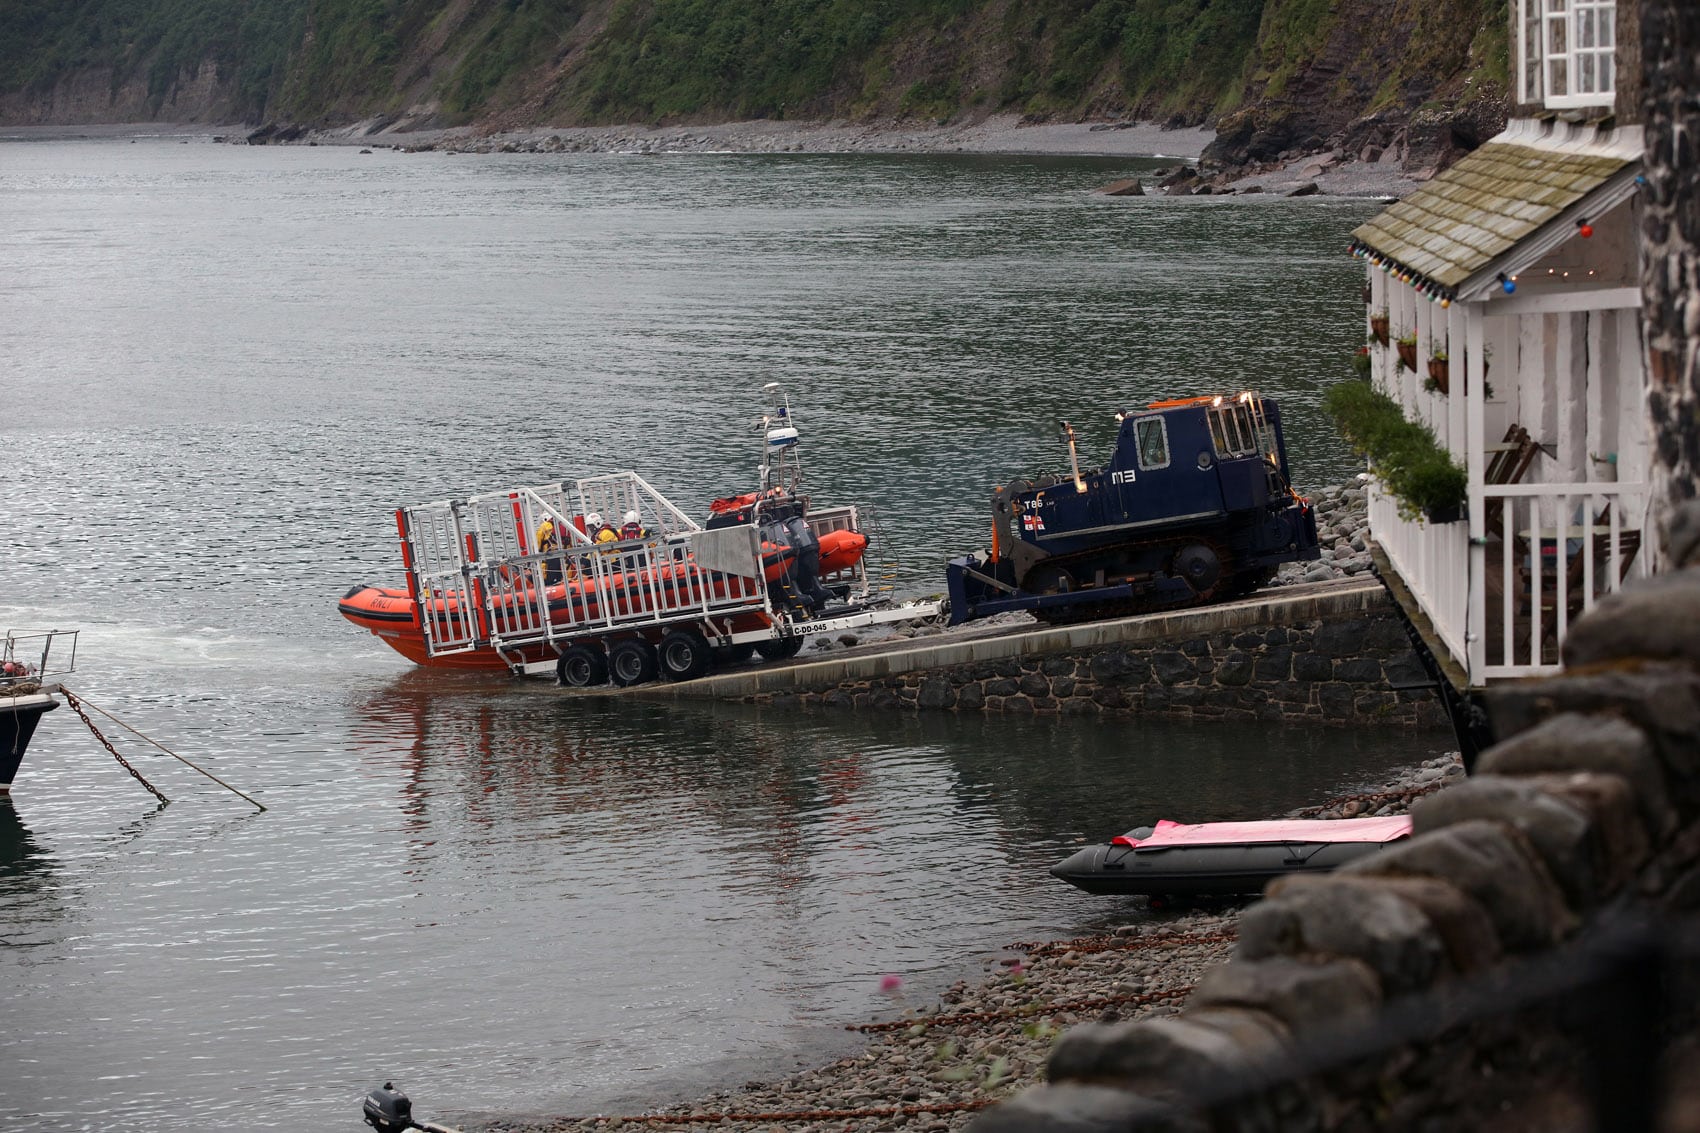 “Clovelly Lifeboat Station”, Stephen Perham’s blog